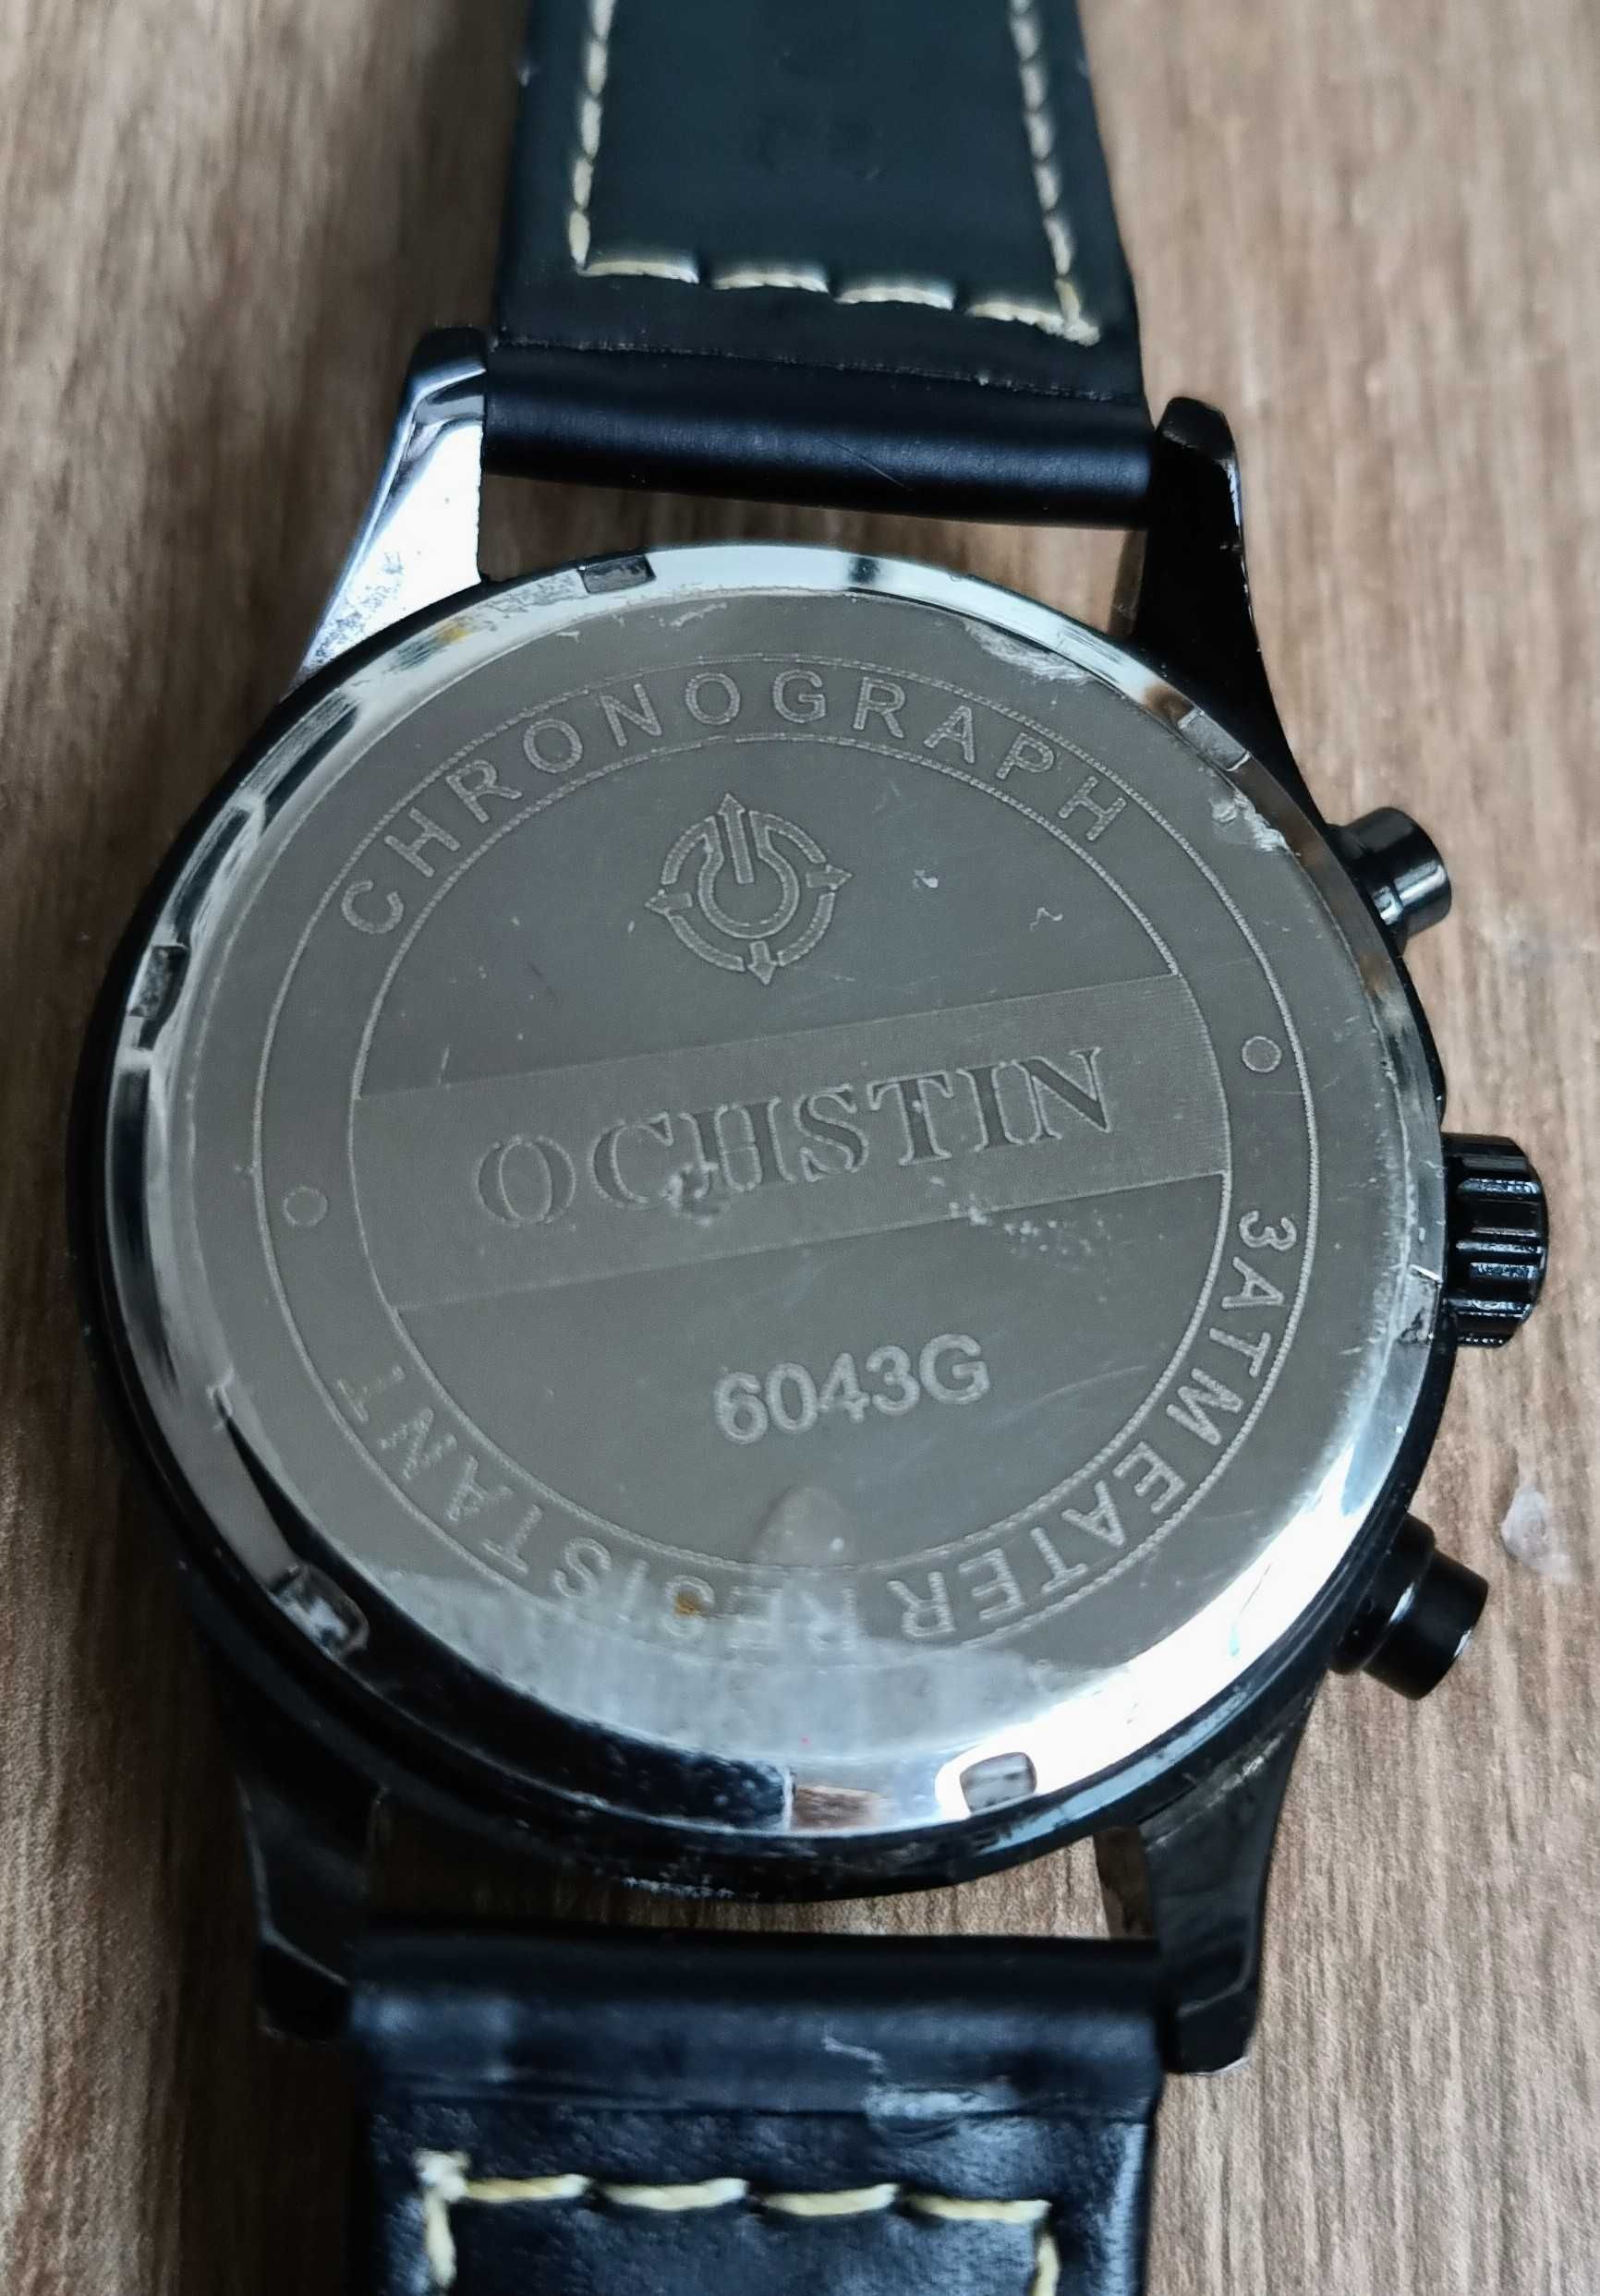 Chronograf / Zegarek firmy OCHSTIN